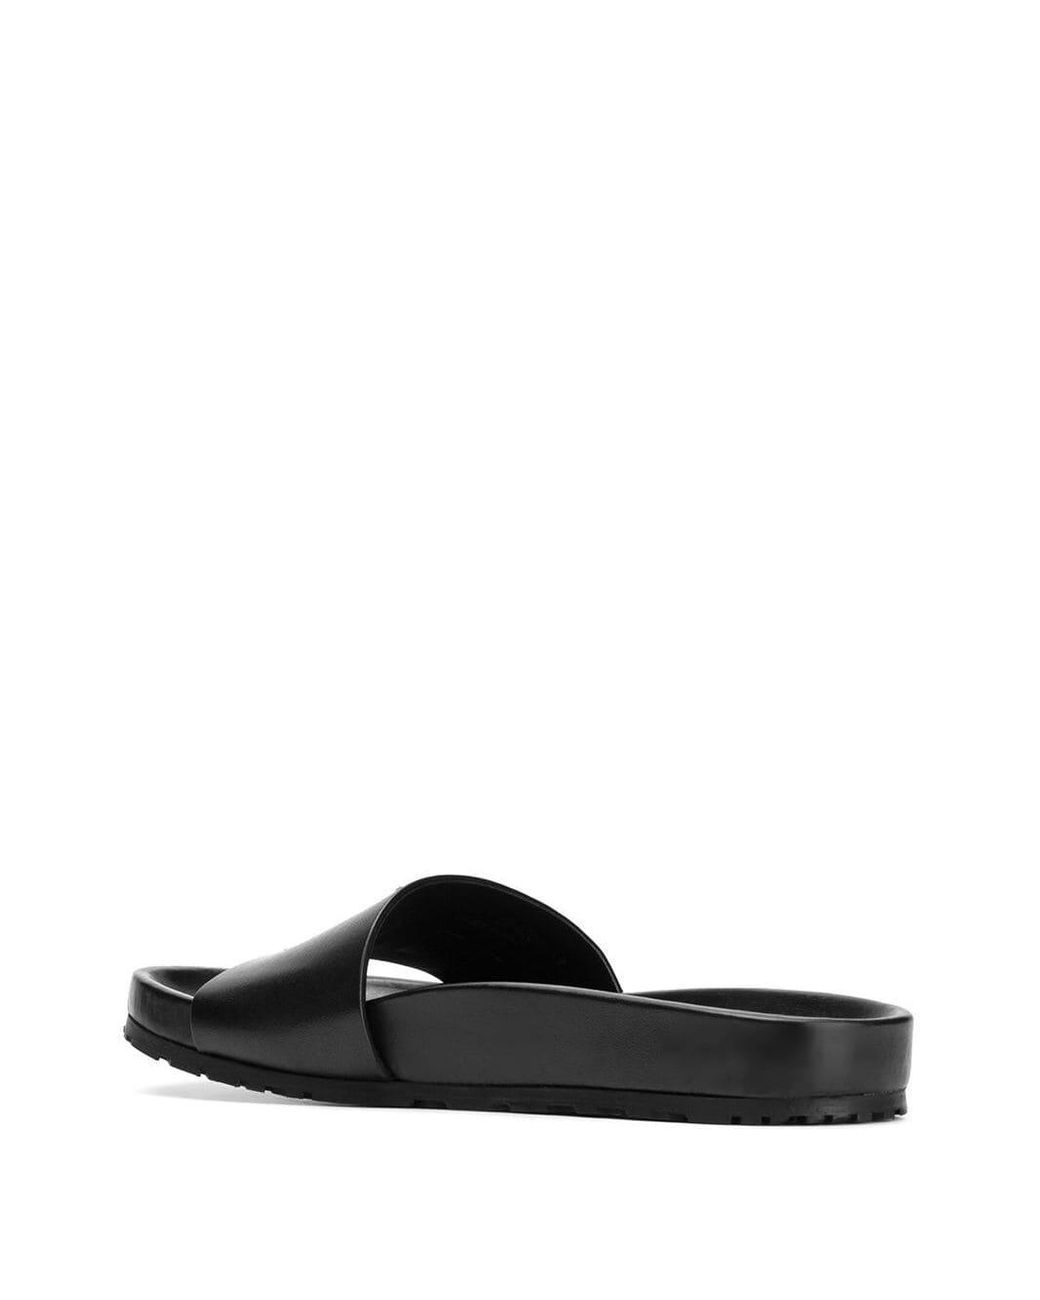 Saint Laurent Stitched Logo Pool Sandals in Black | Lyst